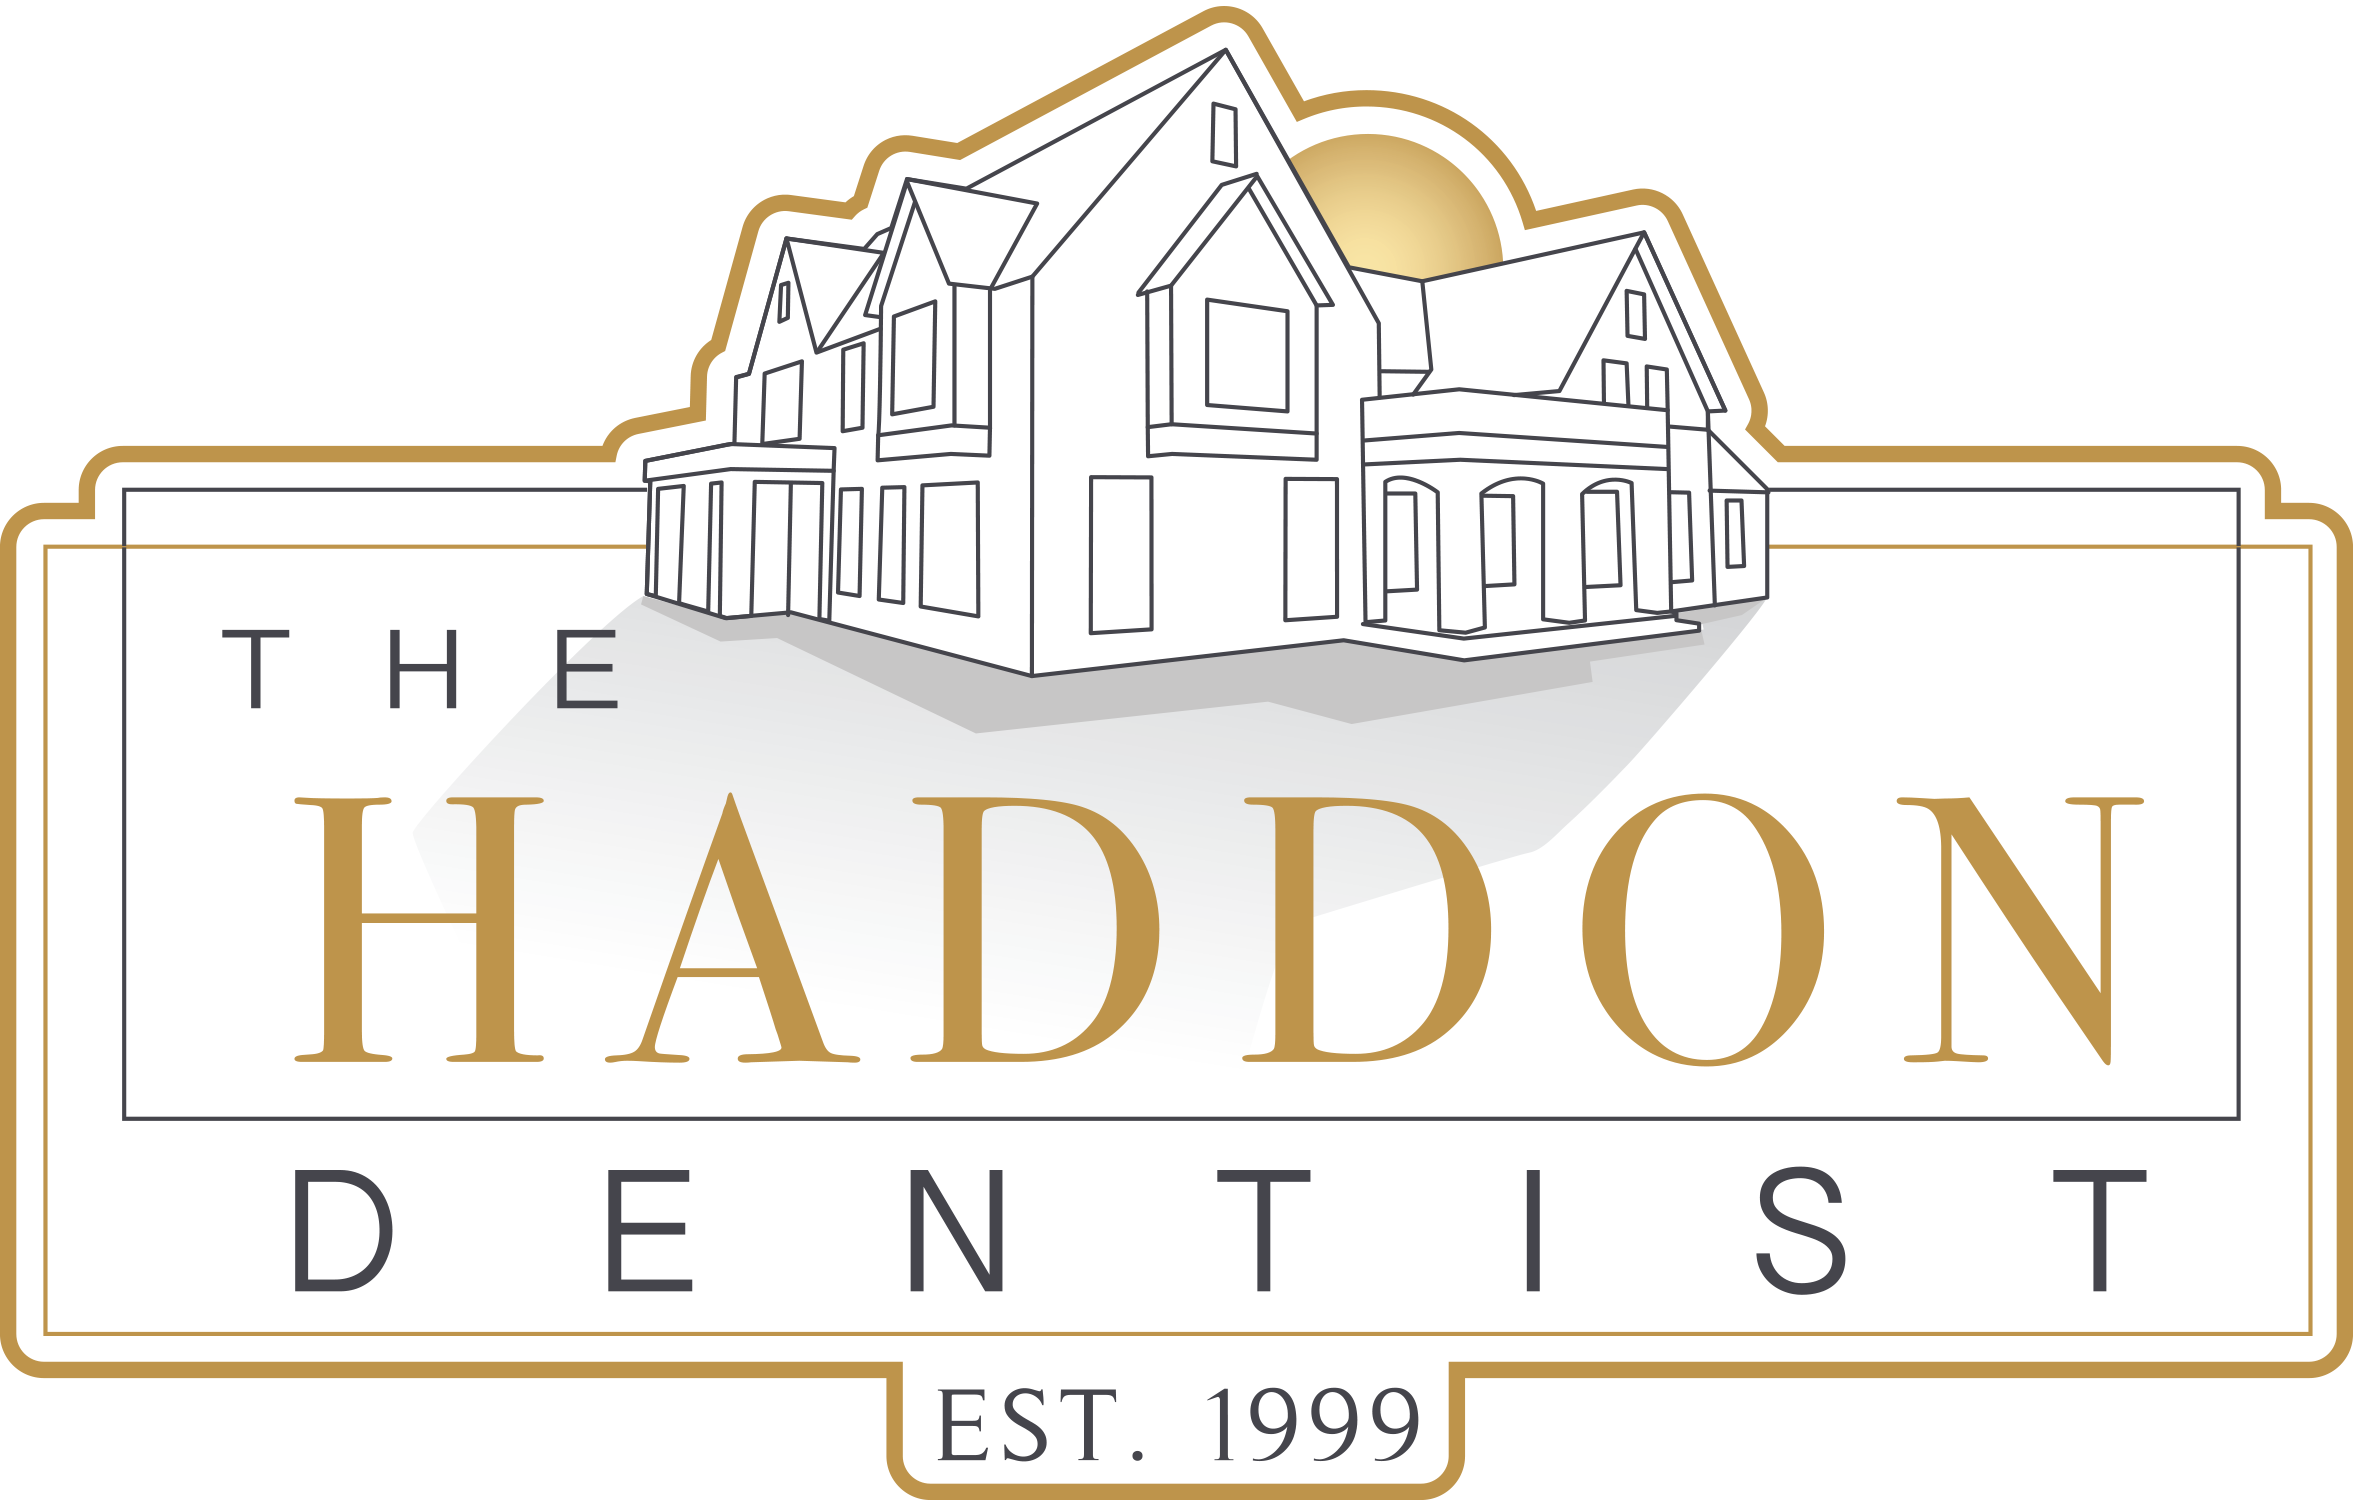 The Haddon Dentist